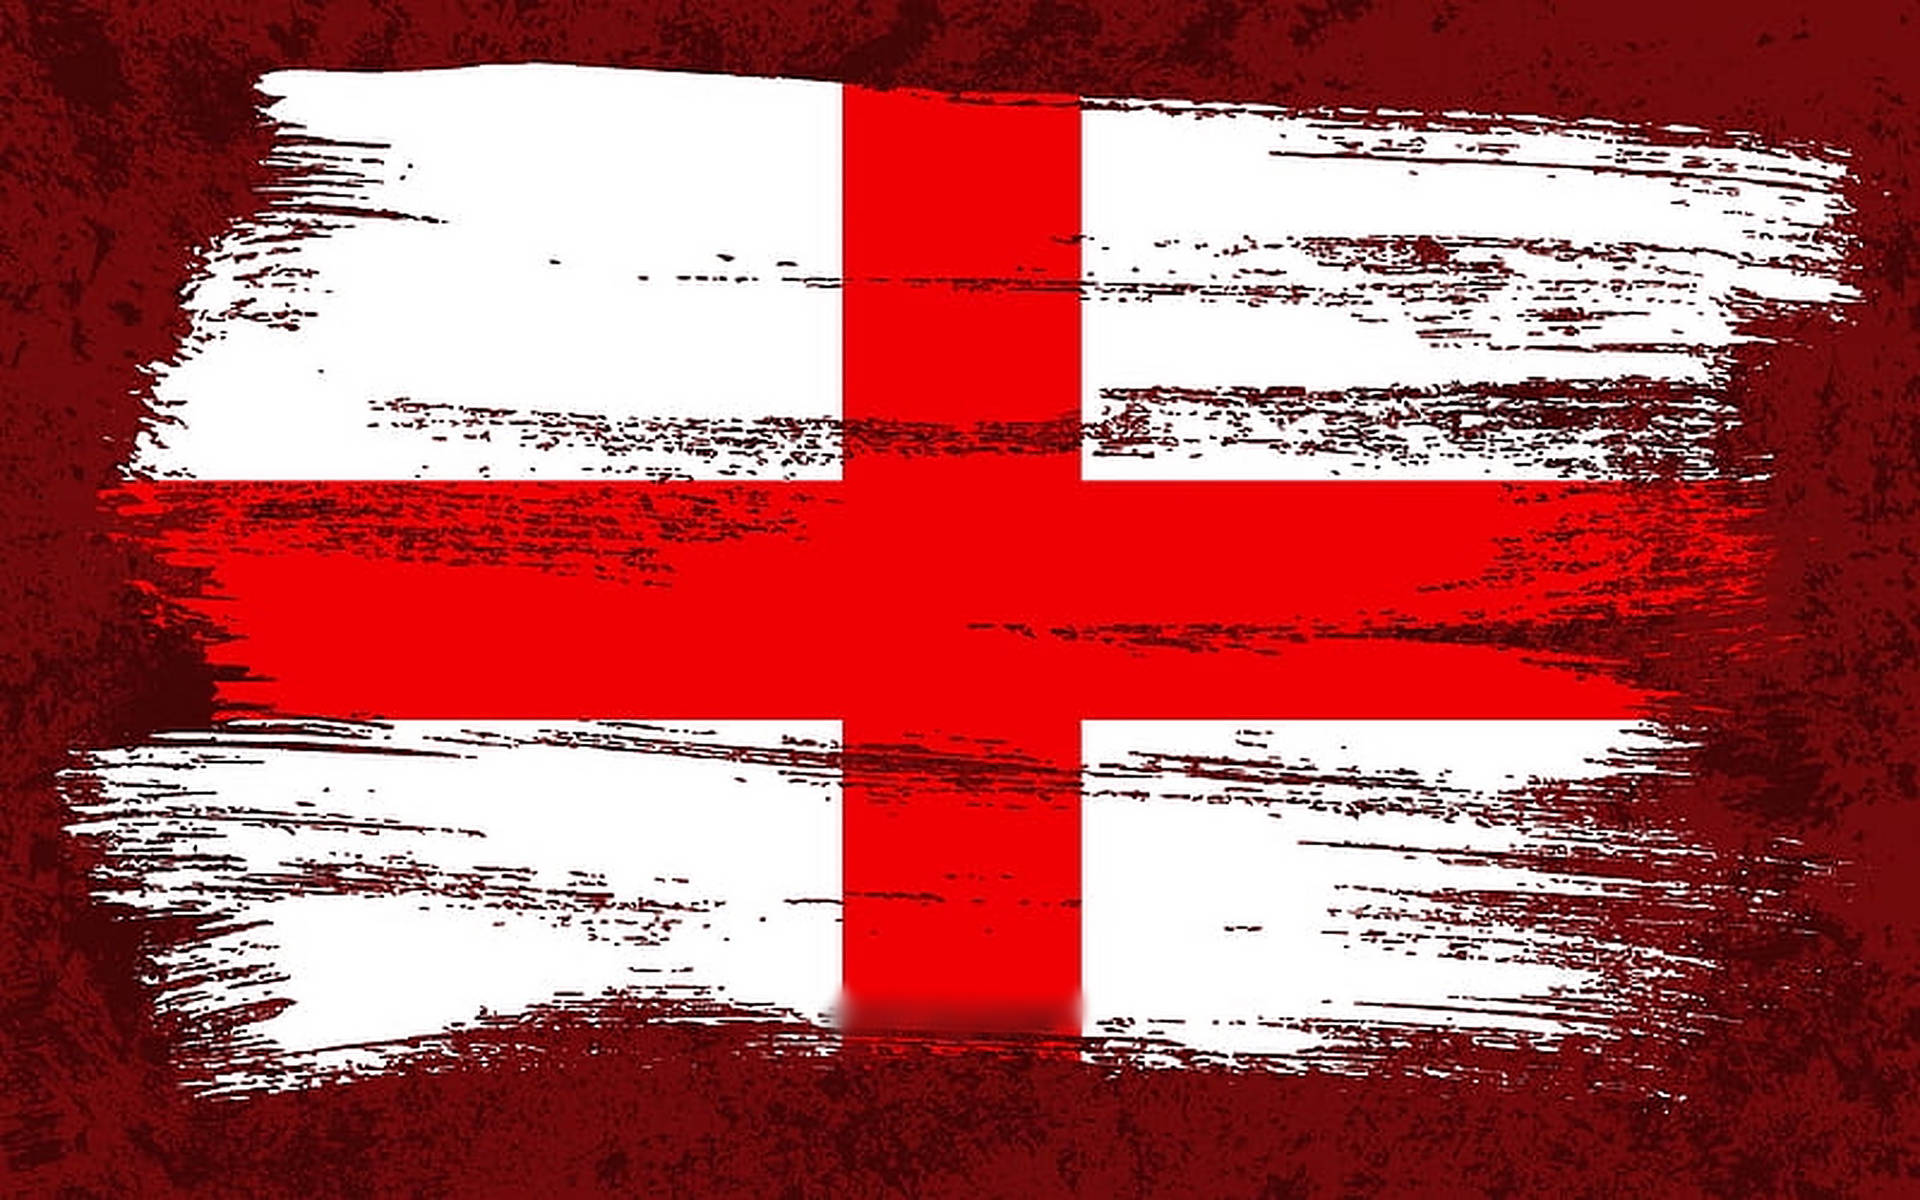 Englandischeflagge Mit Roter Farbe Bemalt Wallpaper